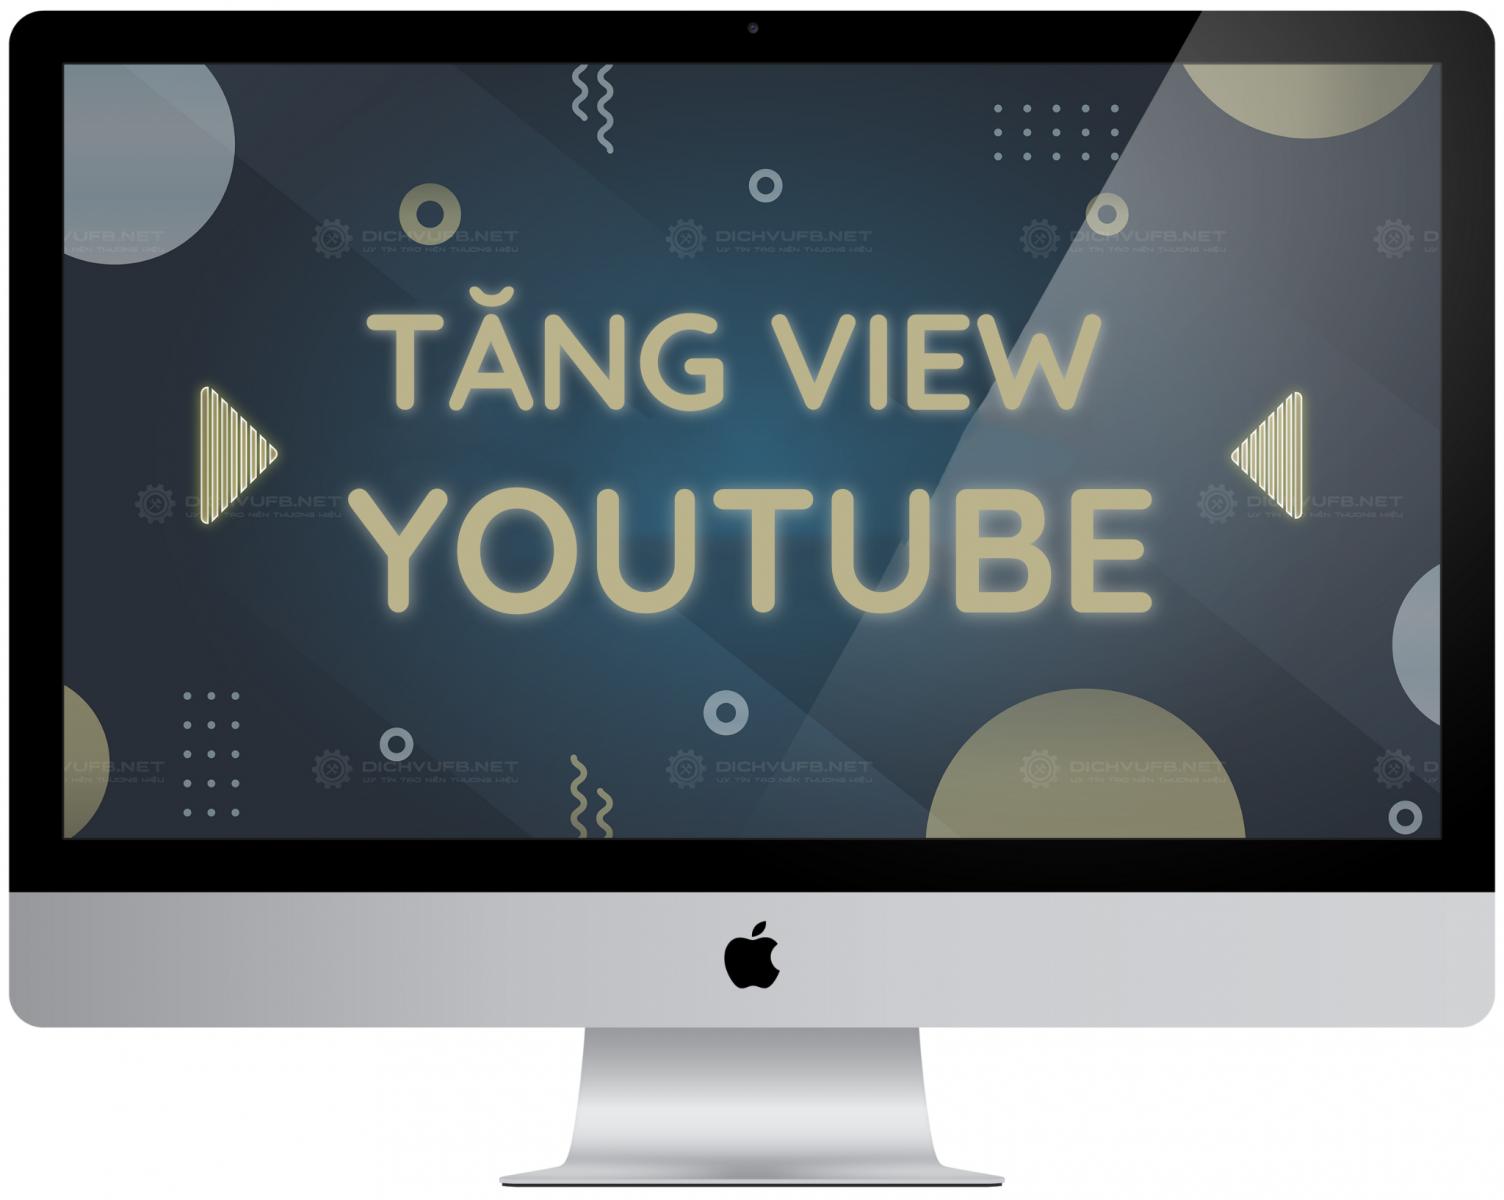 Tăng View Video Youtube